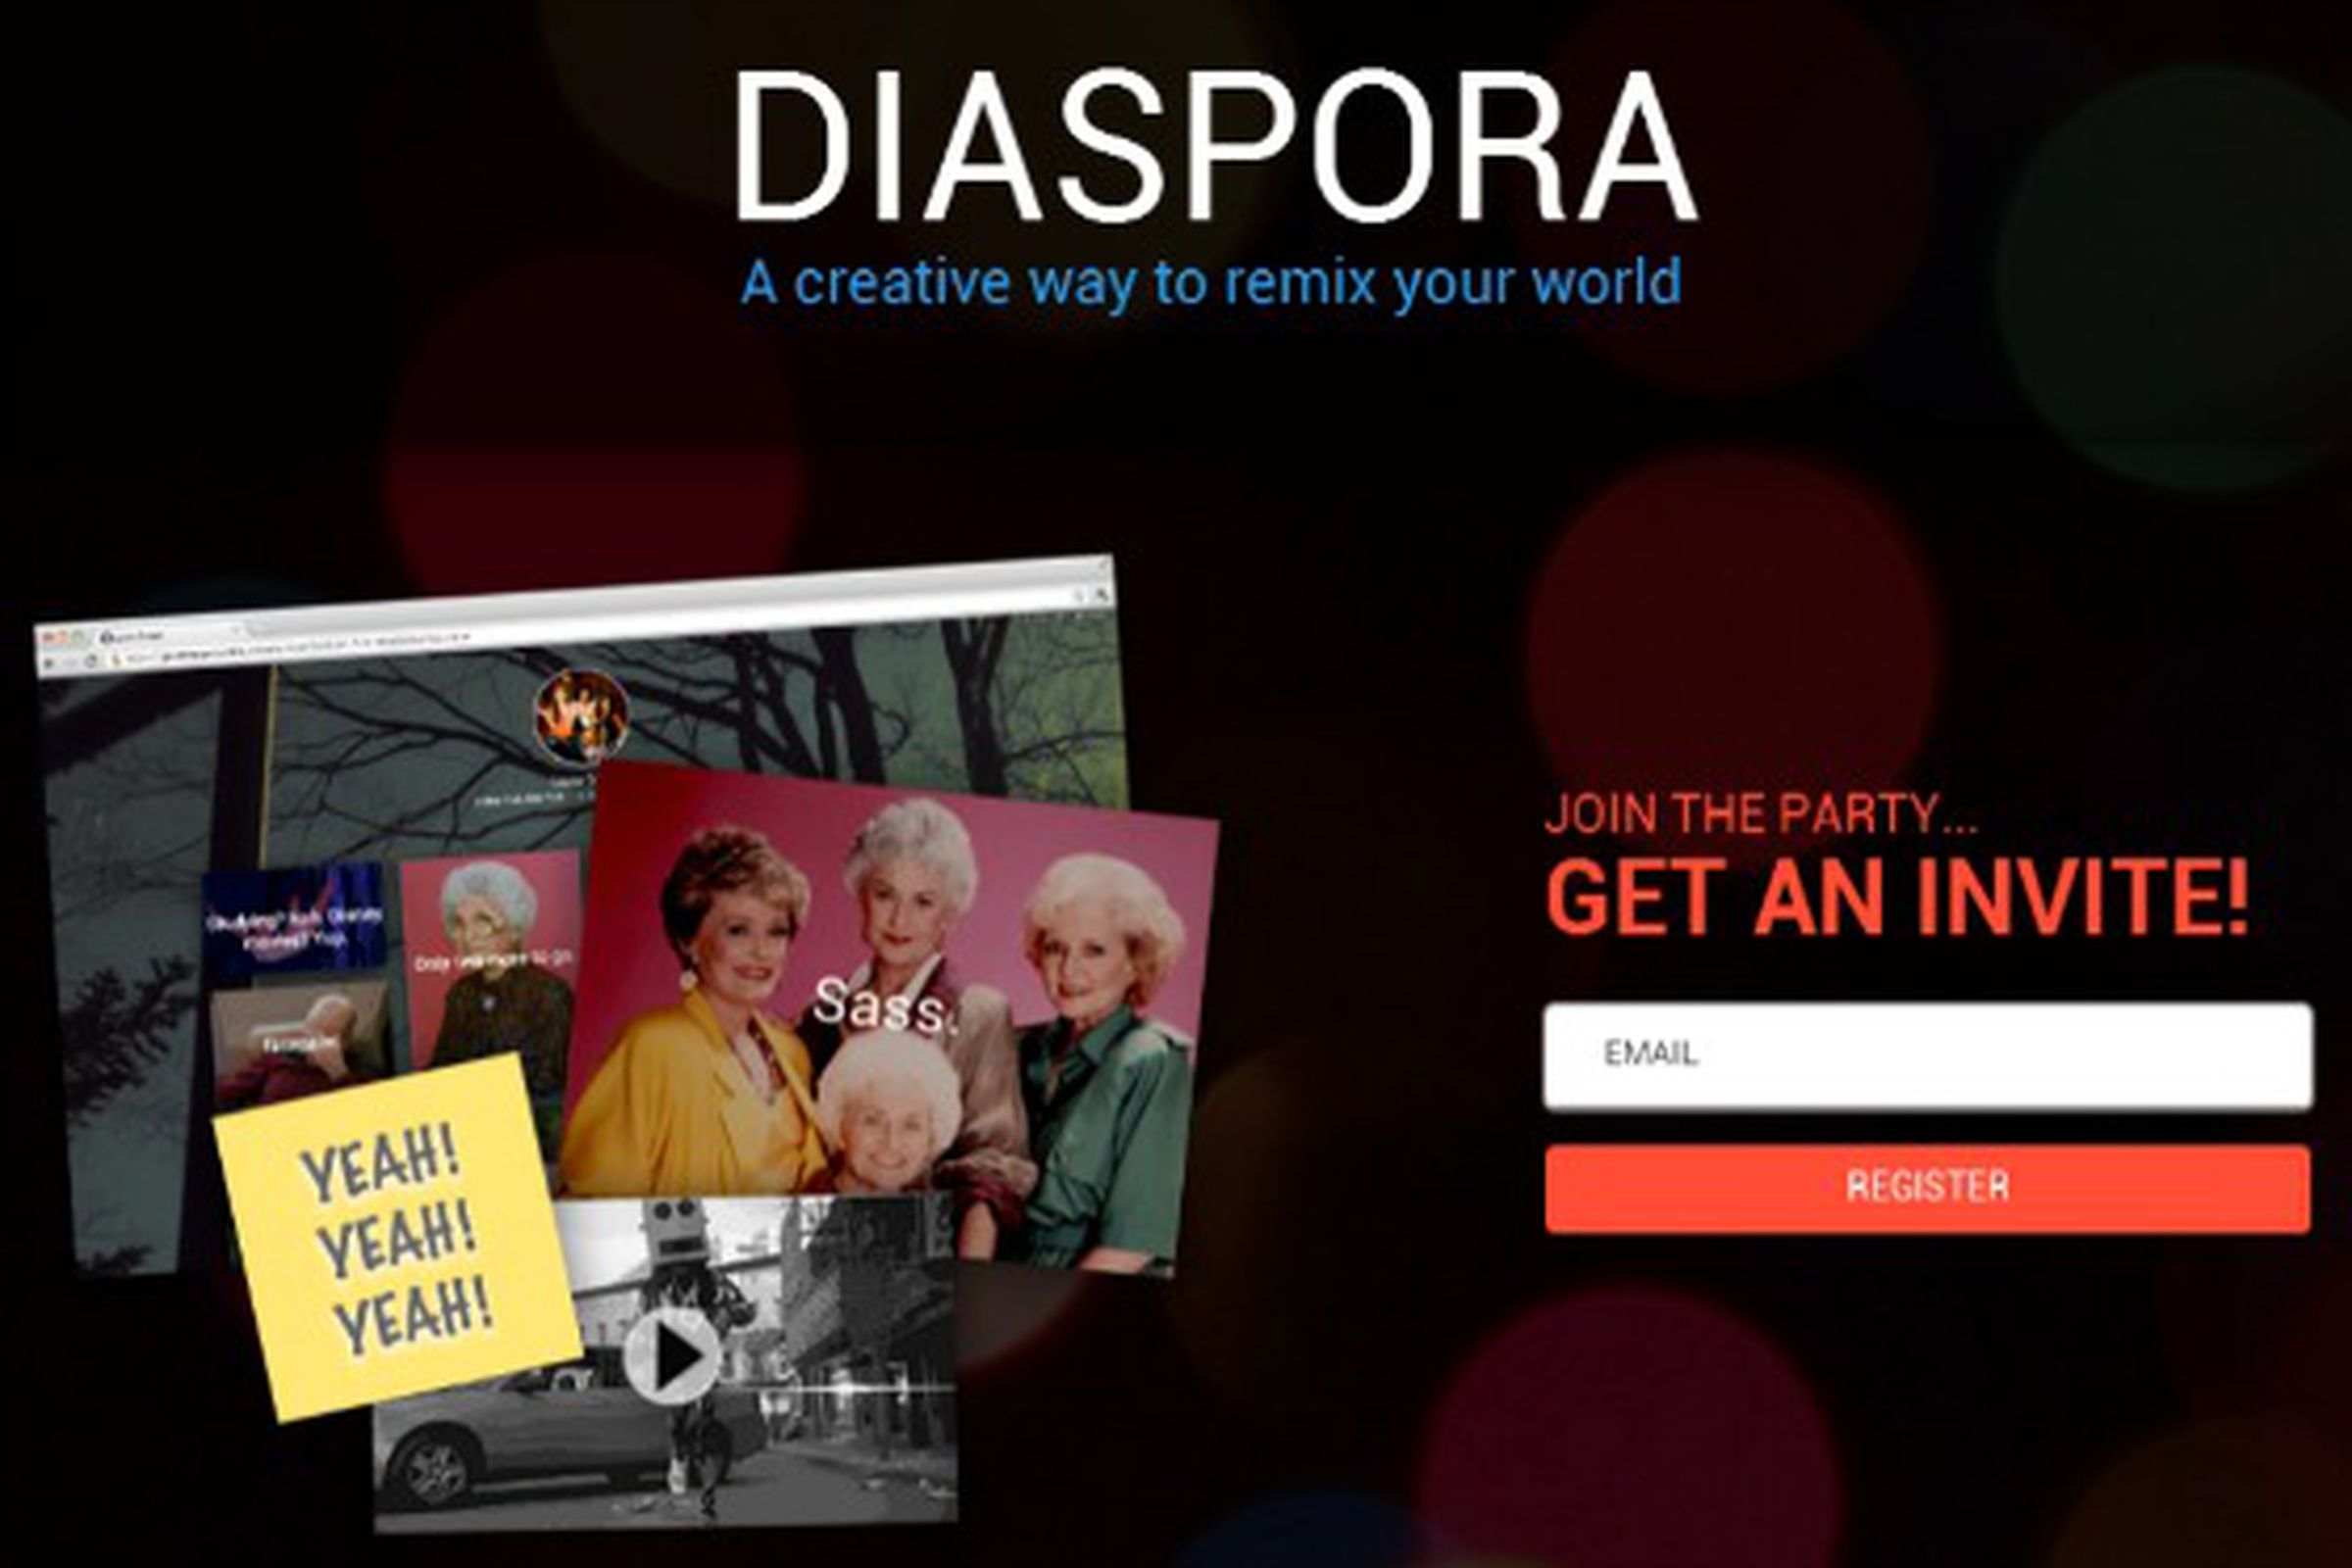 diaspora makr splash page